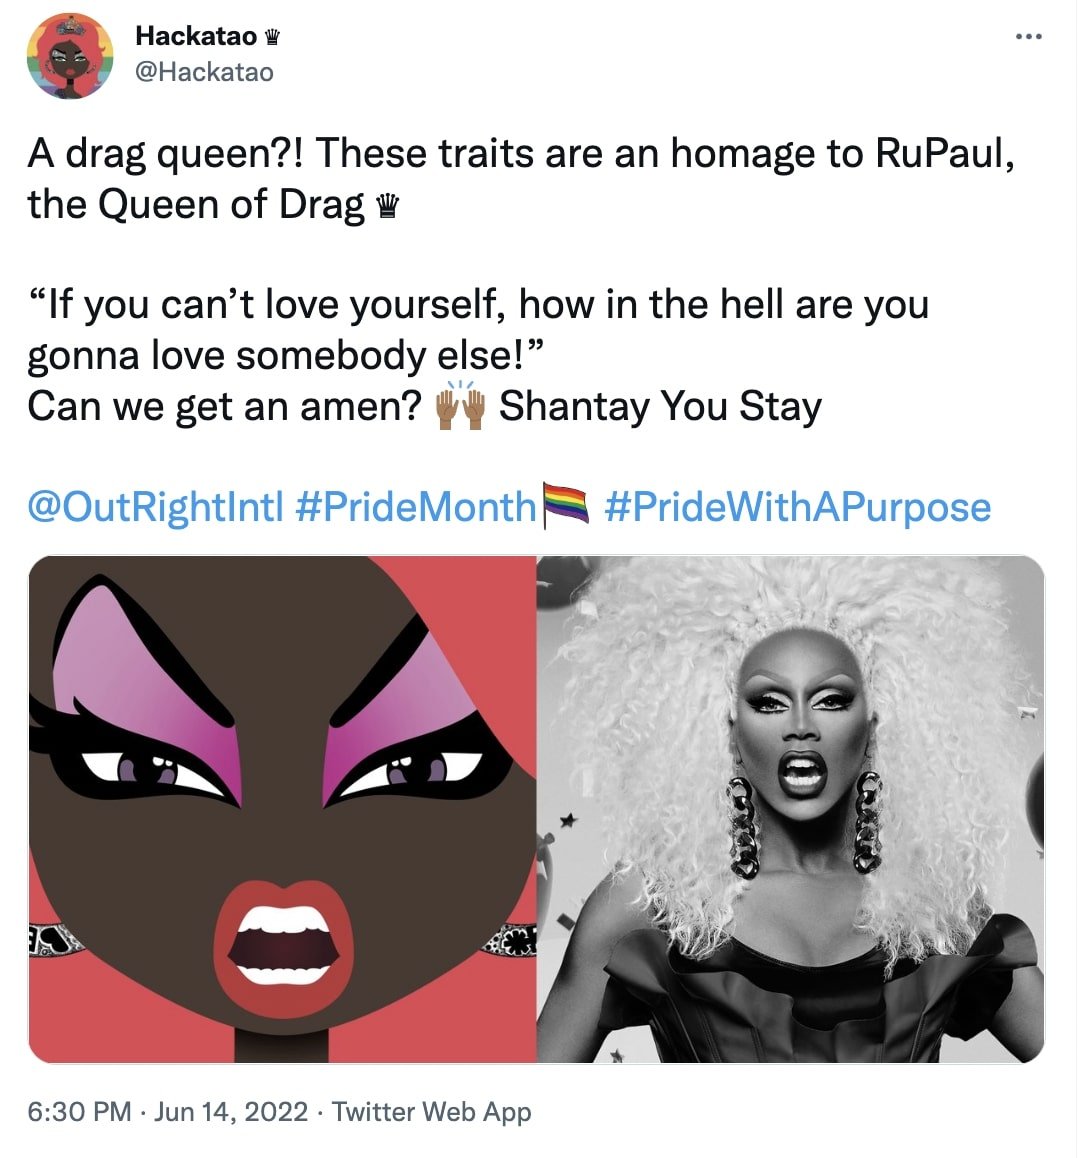 Hackatao's Pride month trait featuring drag queen RuPaul